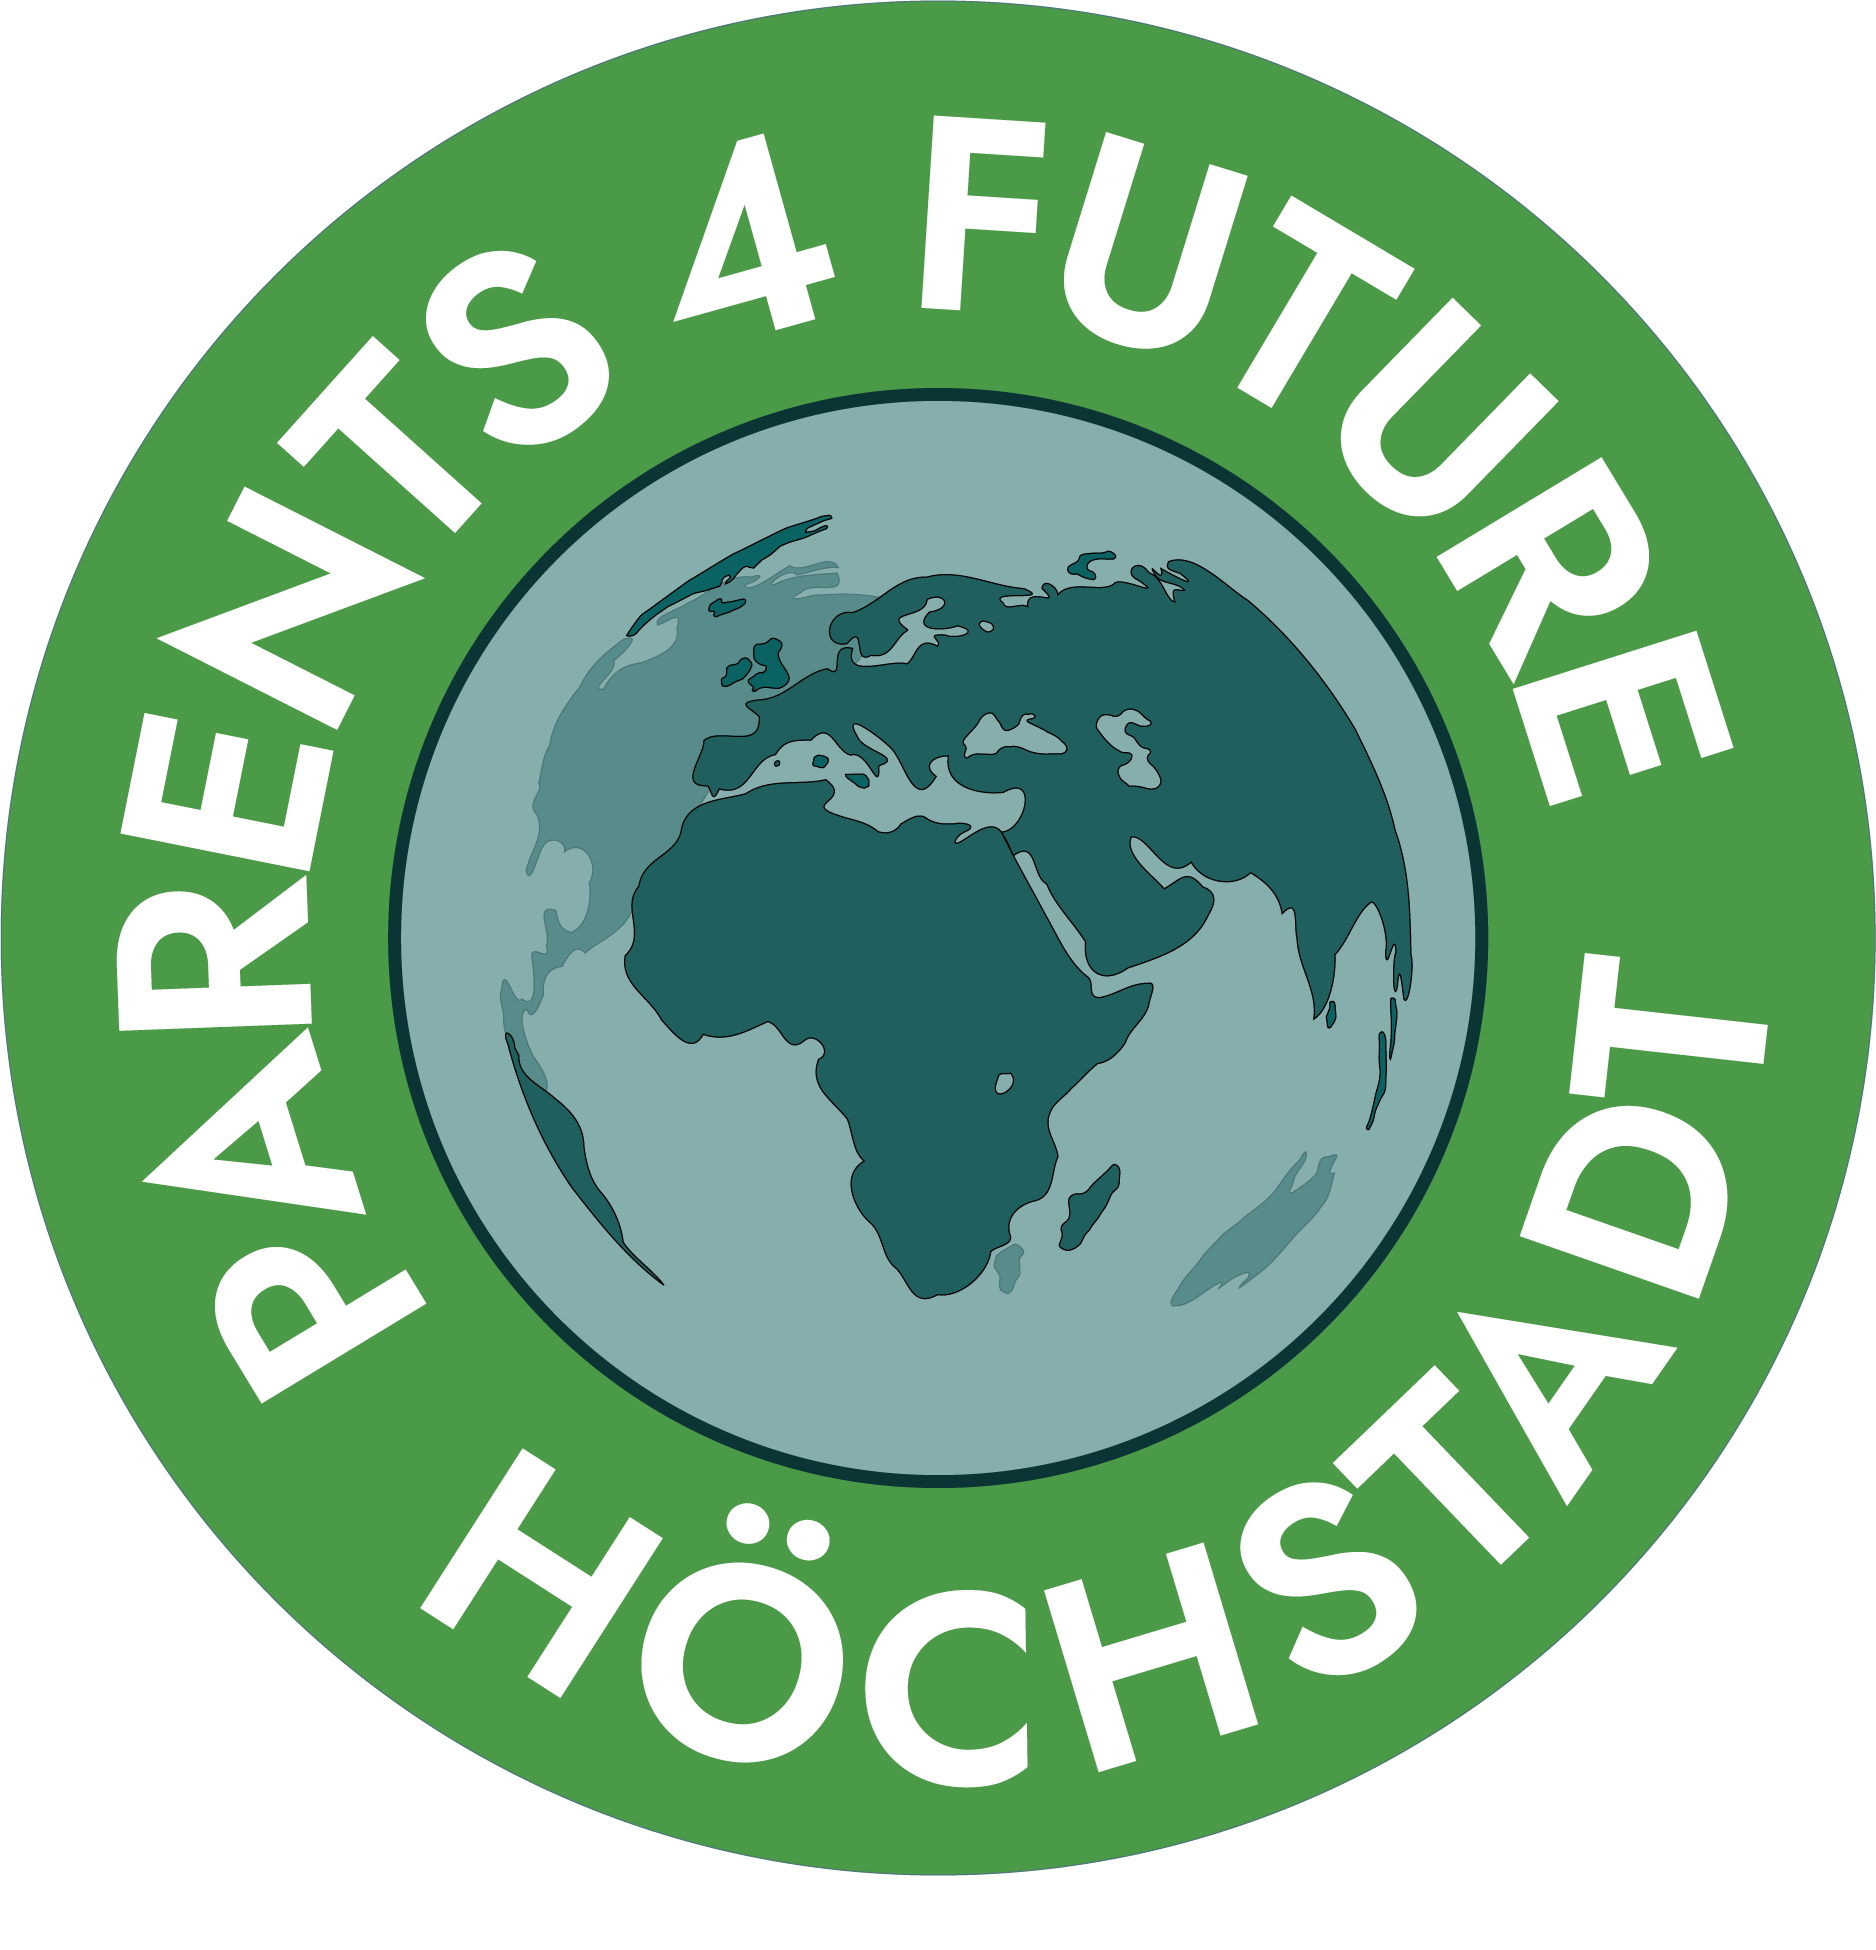 P4F Höchstadt Logo